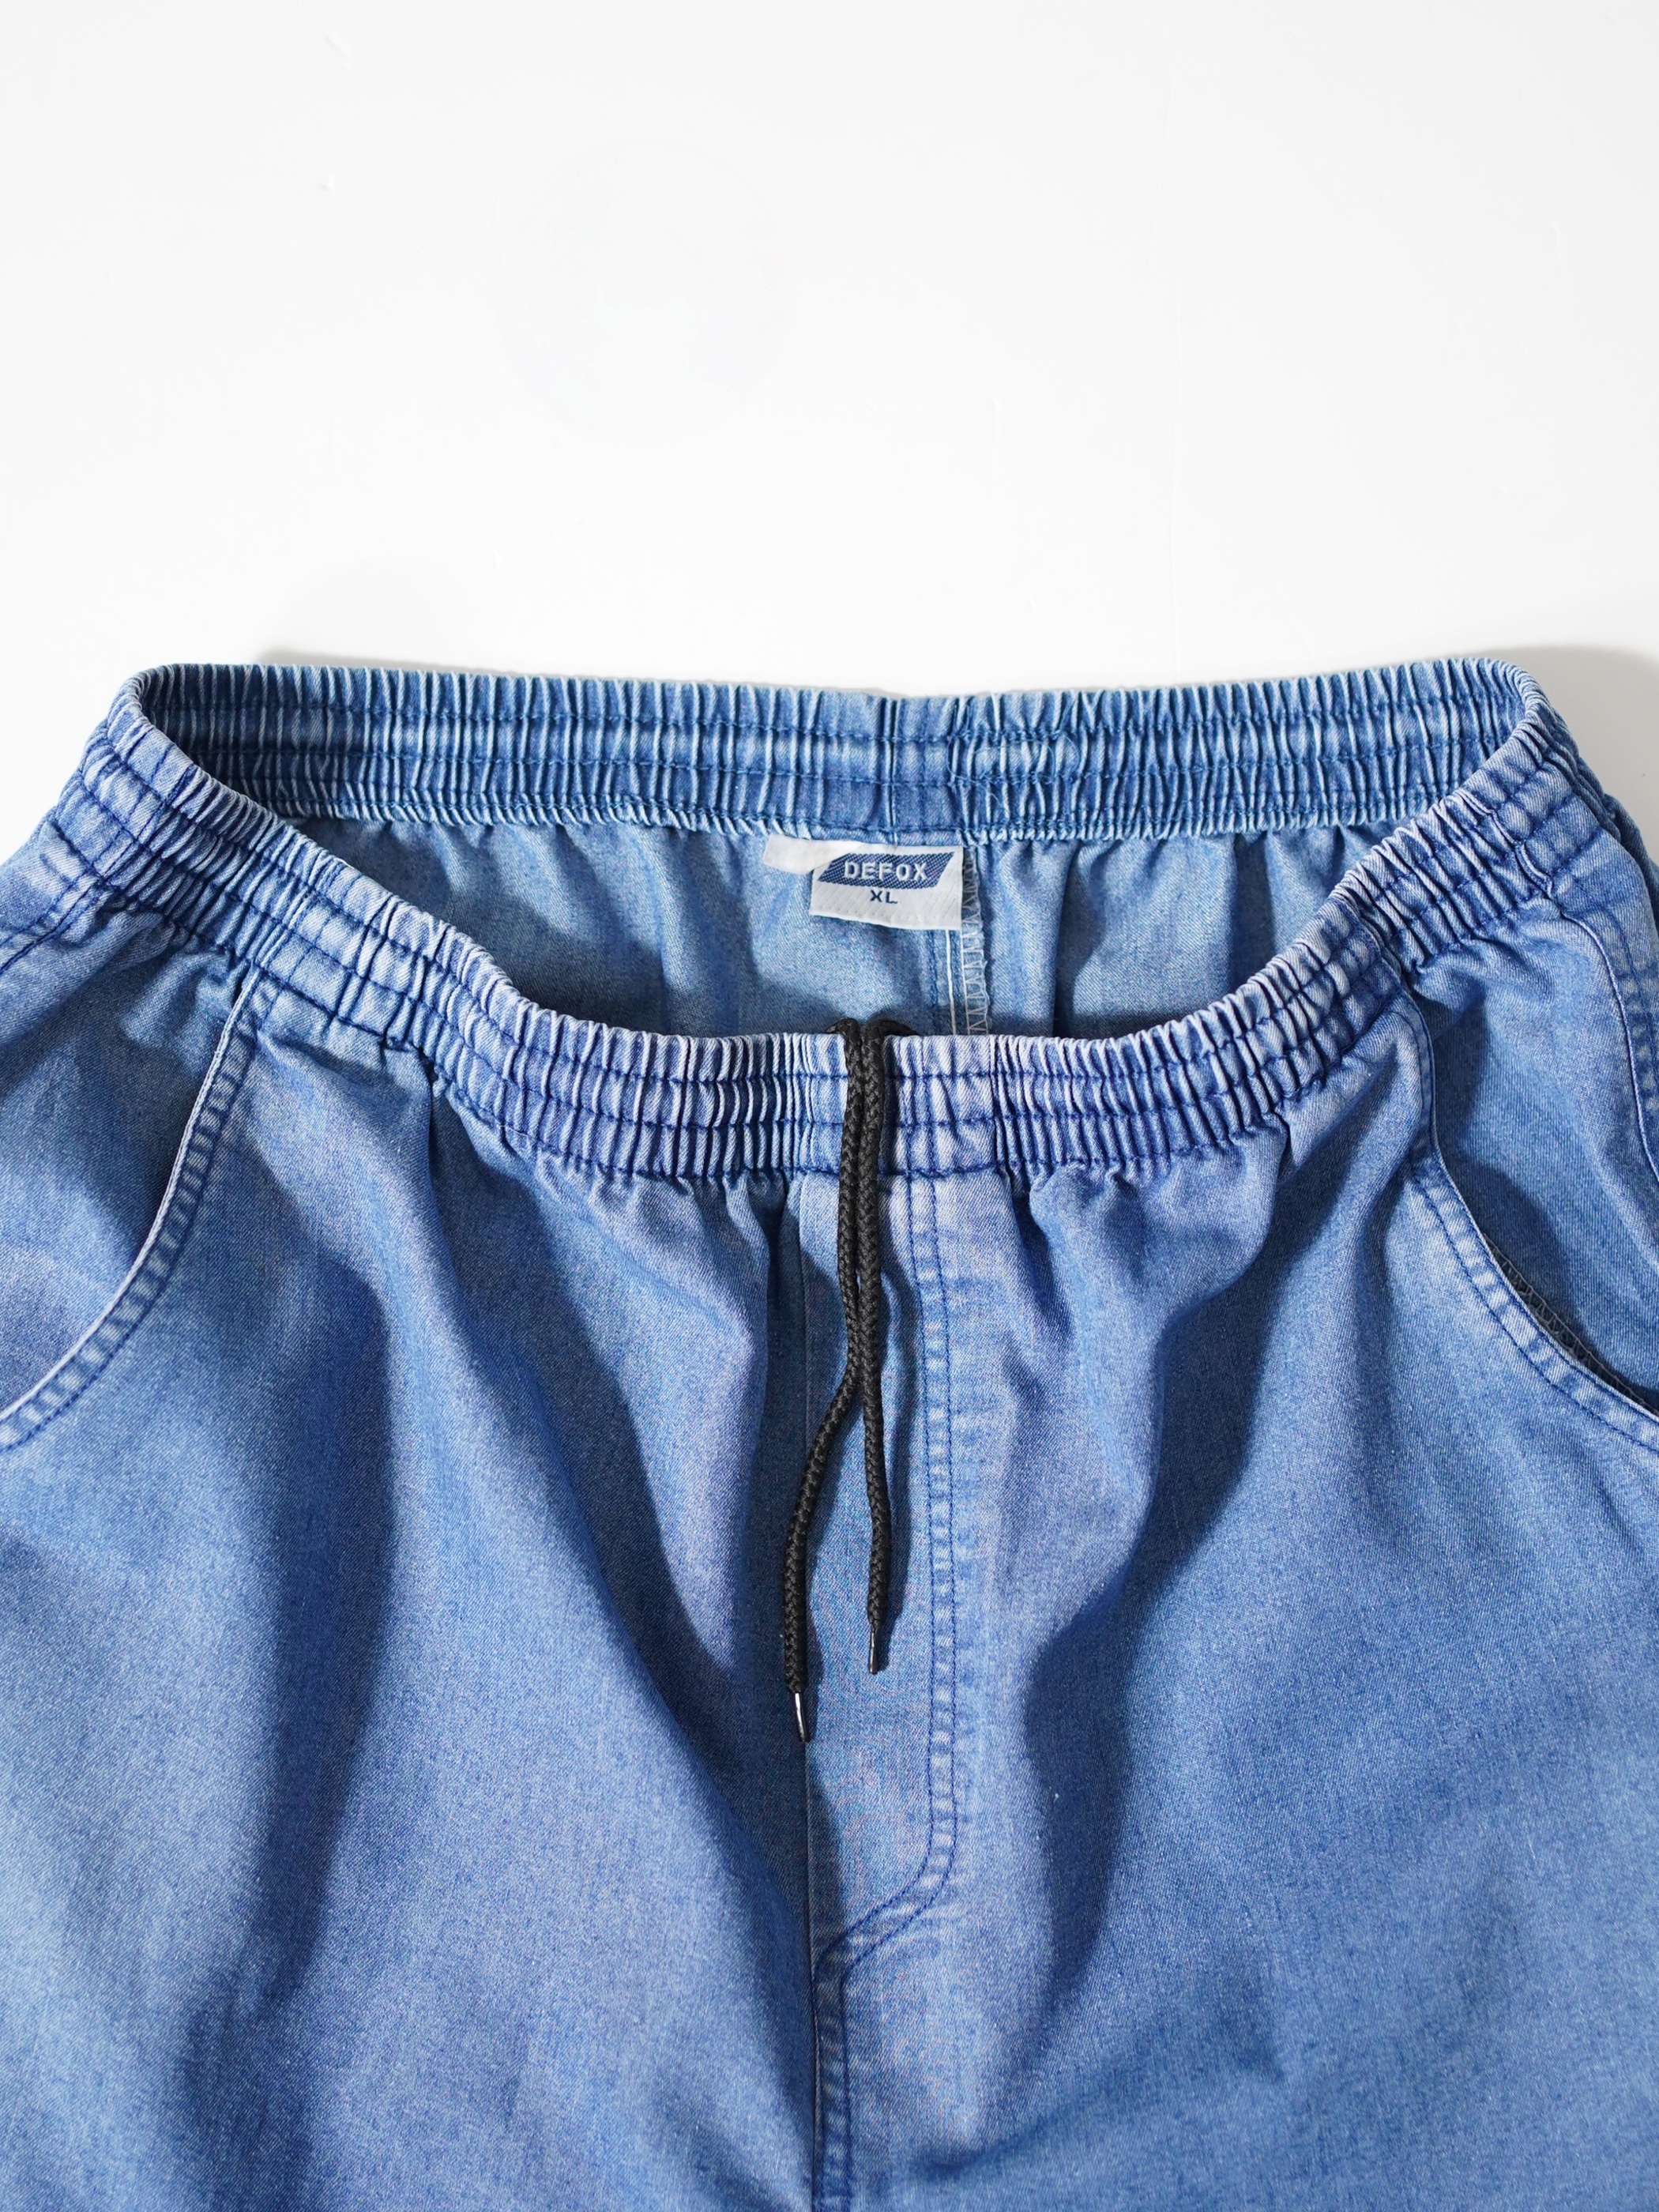 DEFOX Cotton Elastic pants